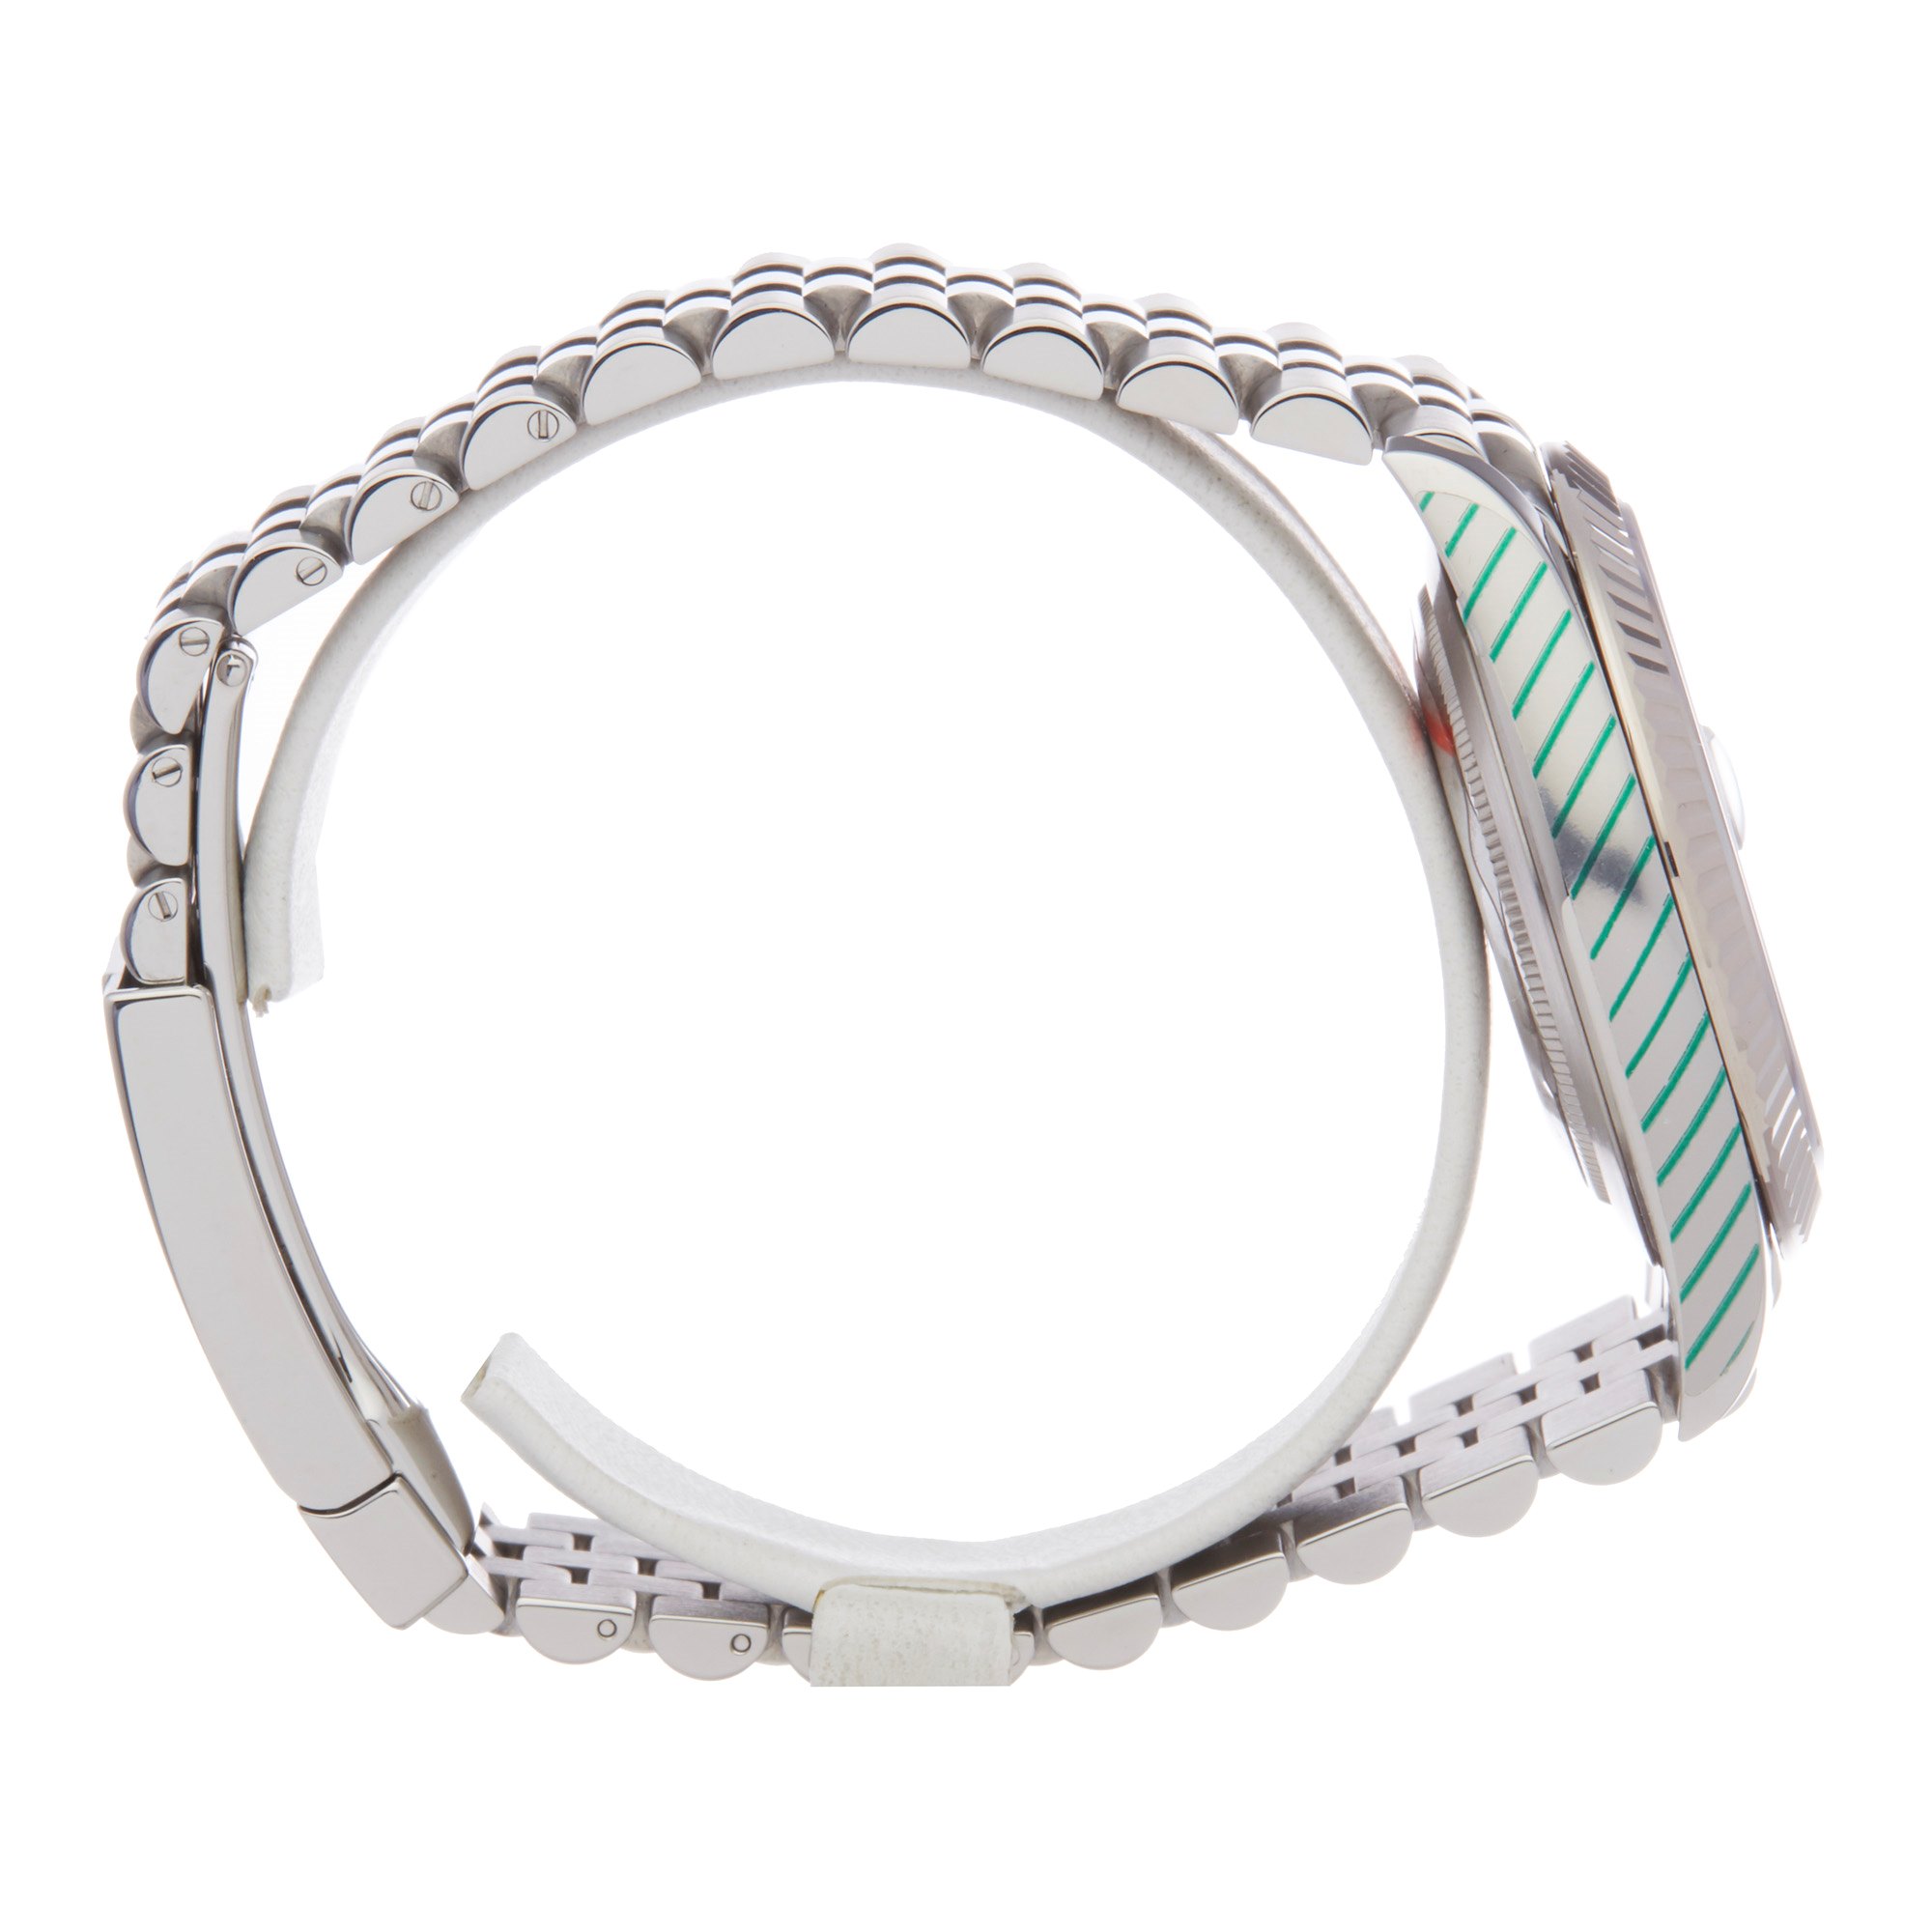 Rolex Datejust 41 Diamond Stainless Steel Watch 126334 - Image 4 of 8